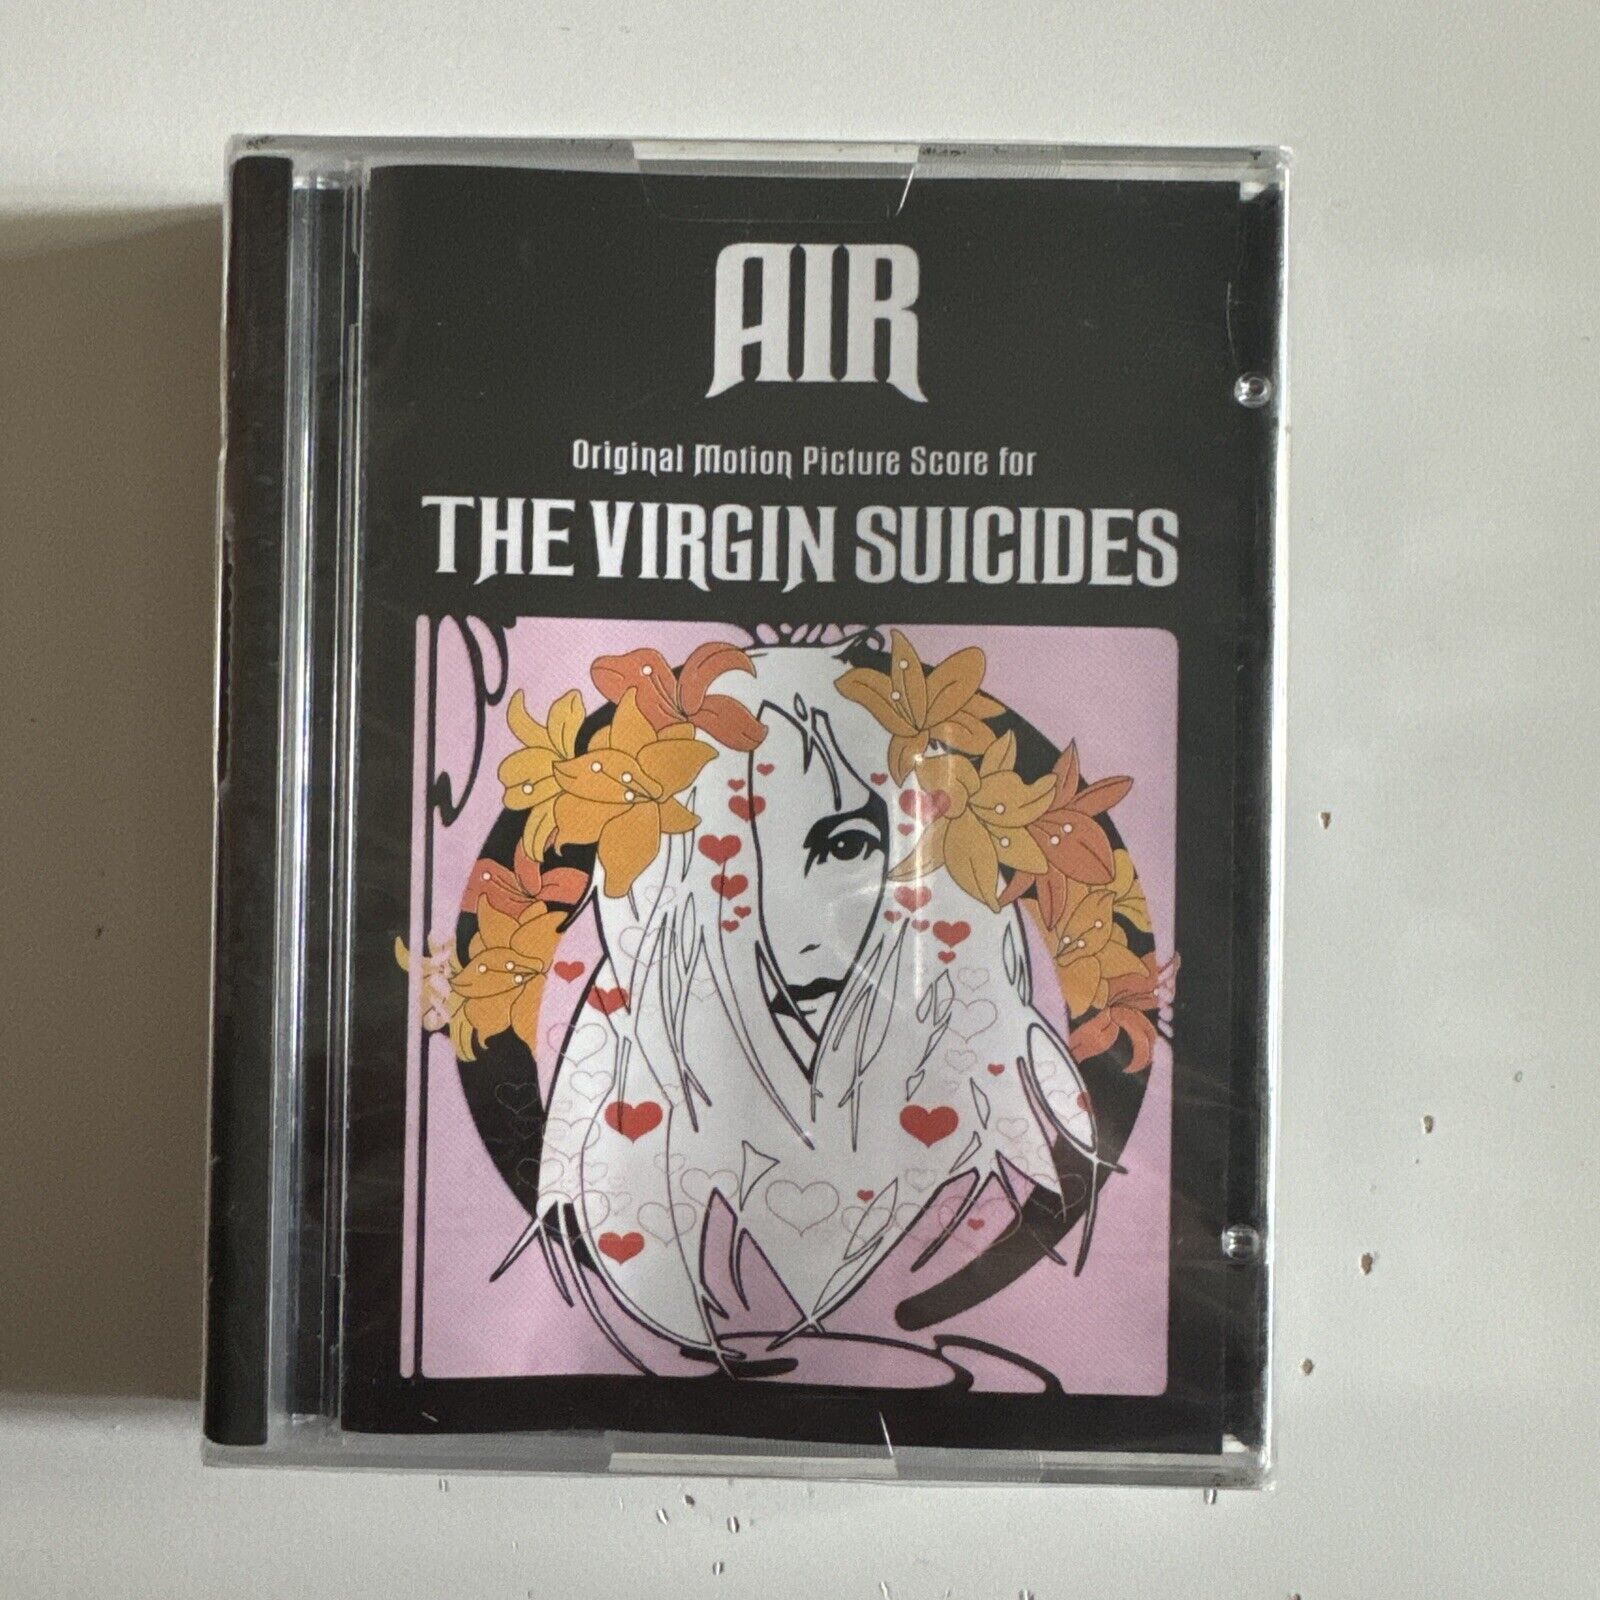 AIR - The Virgin Suicides Soundtrack Minidisc MD Album - Rare Mint Sealed